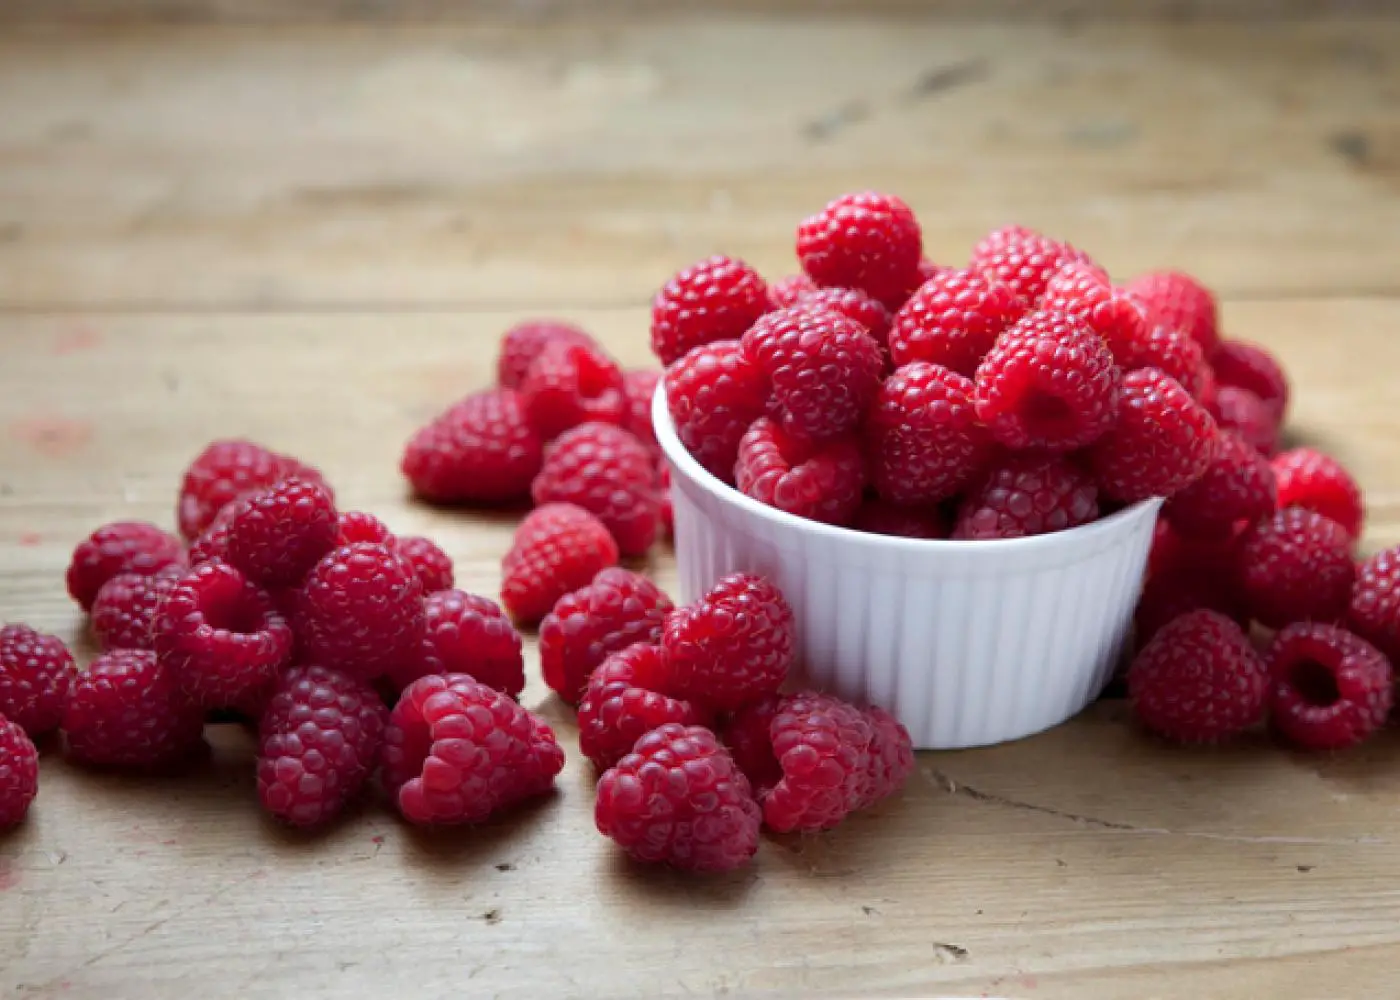 What Do Raspberries Taste Like?